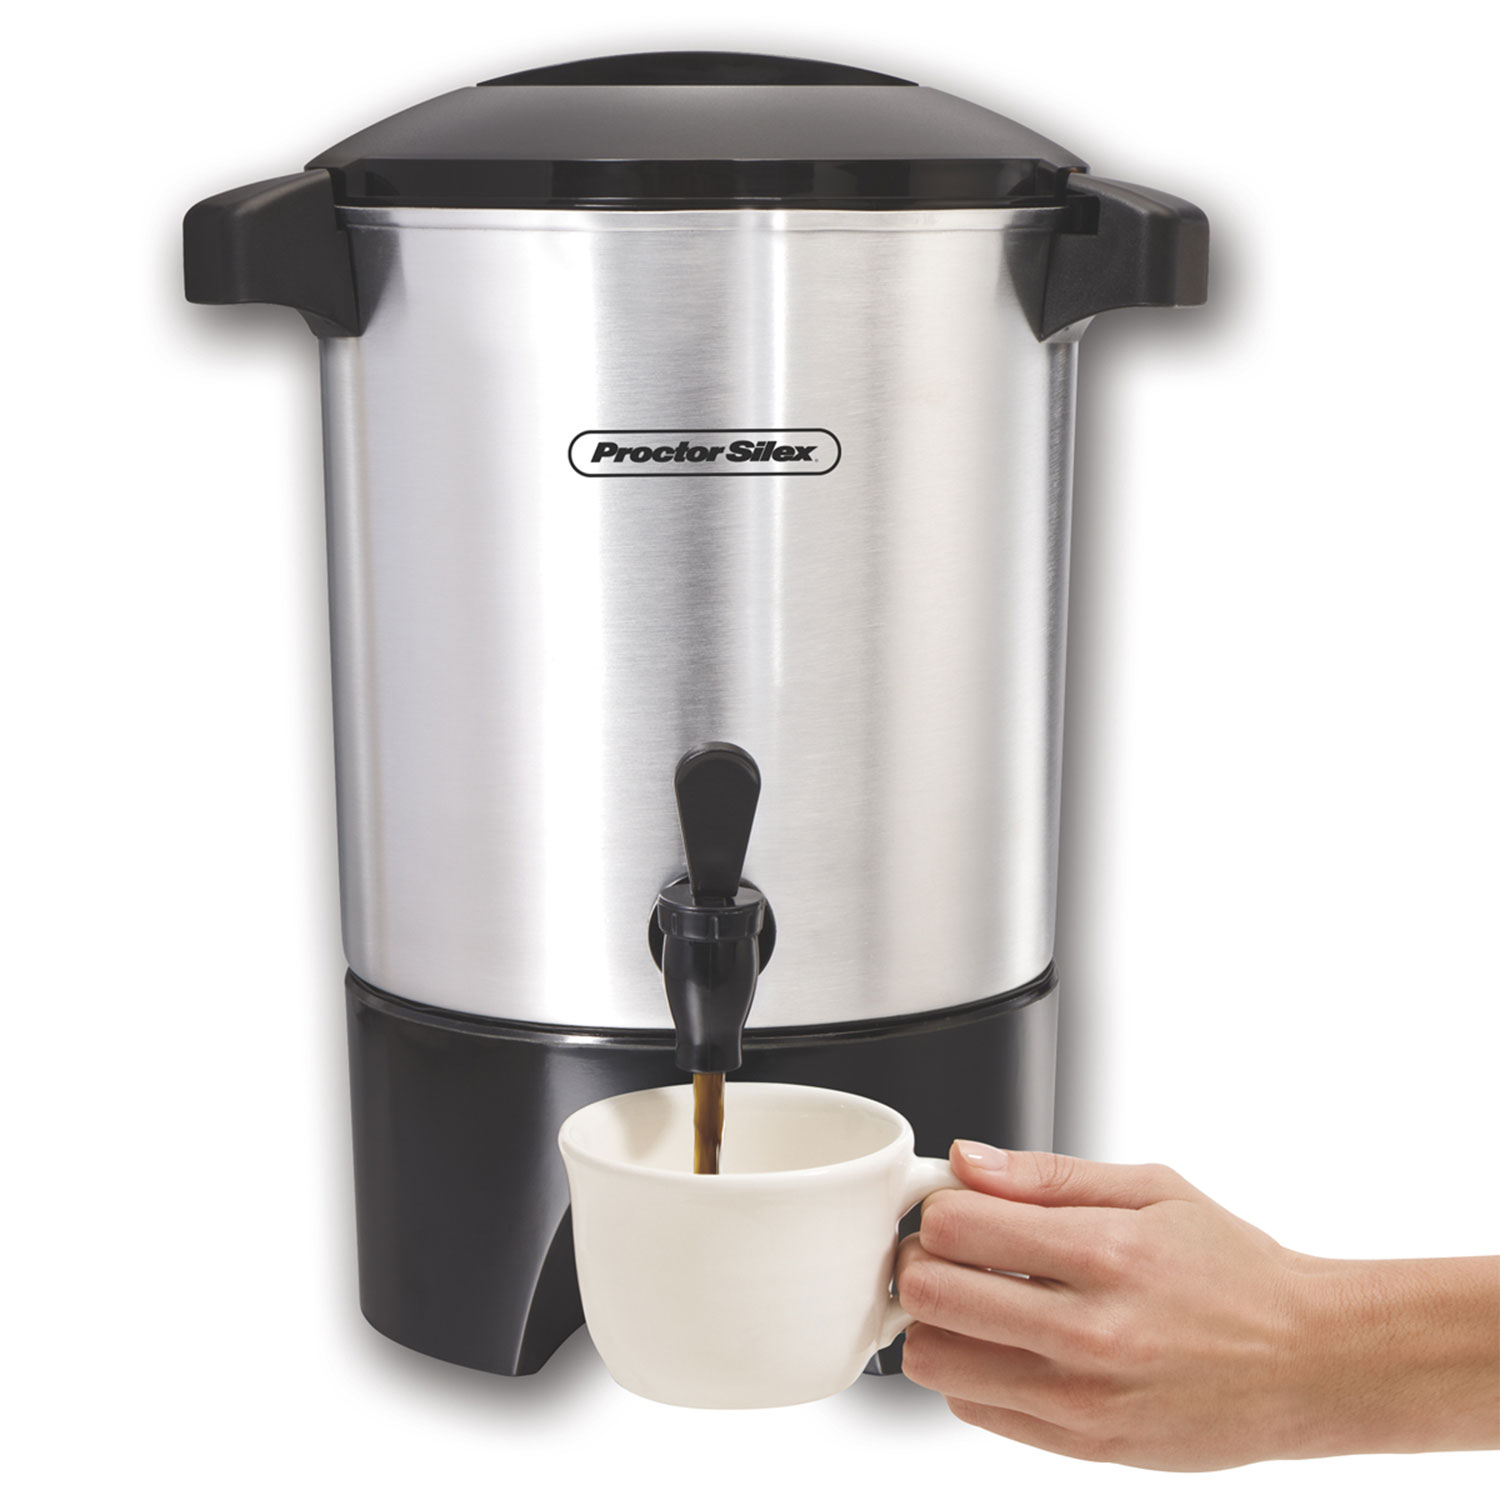 Proctor Silex 12 Cup Coffee Maker, Model# 48524 